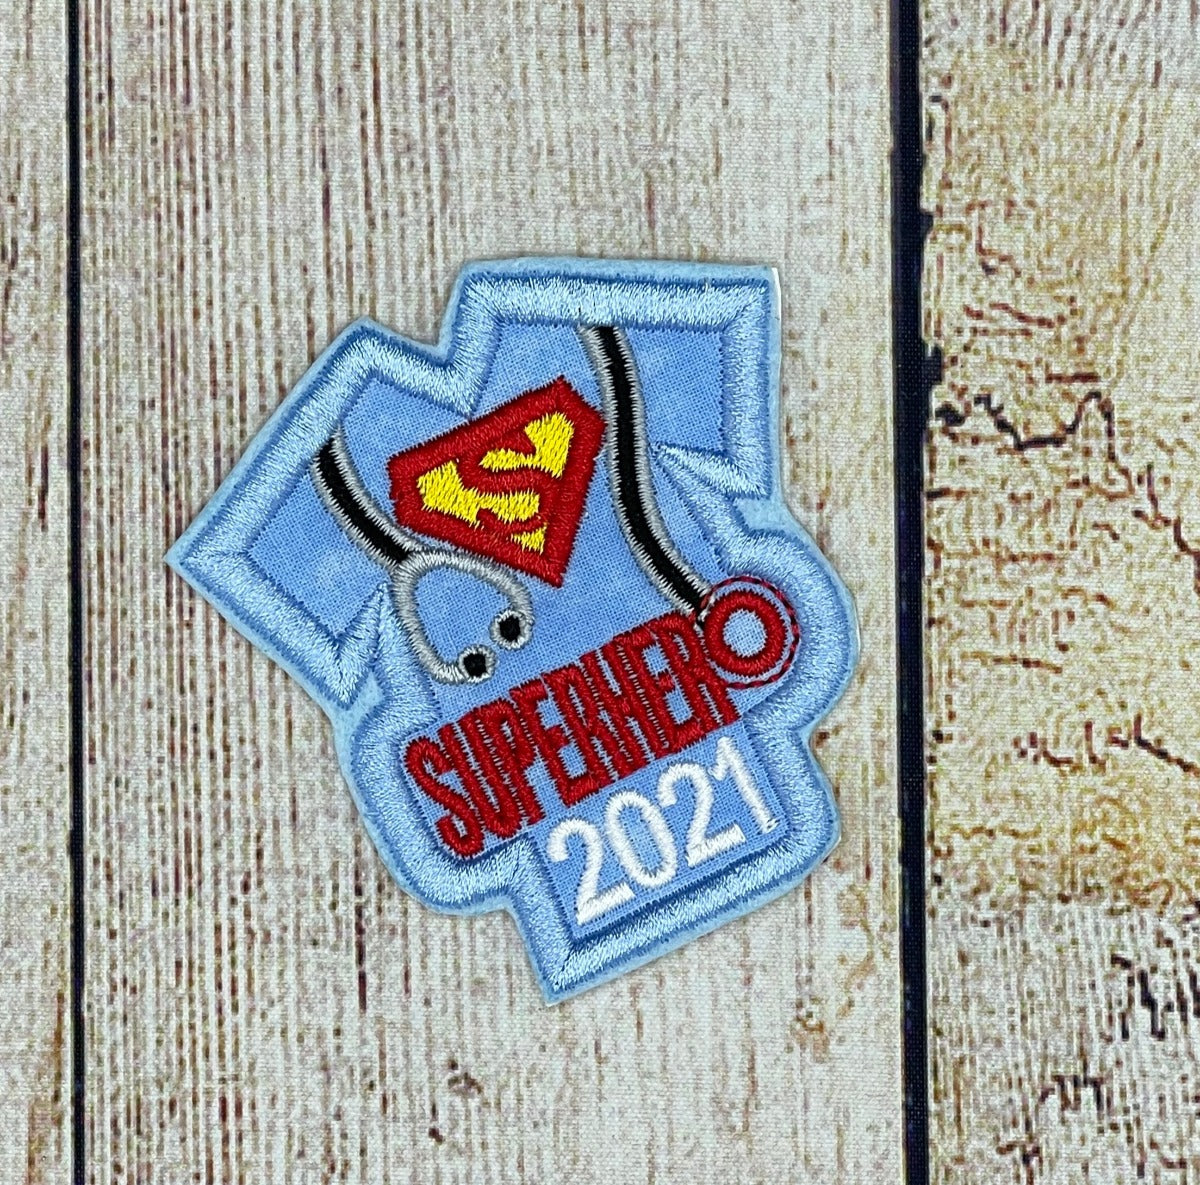 2021 Superhero healthcare patch